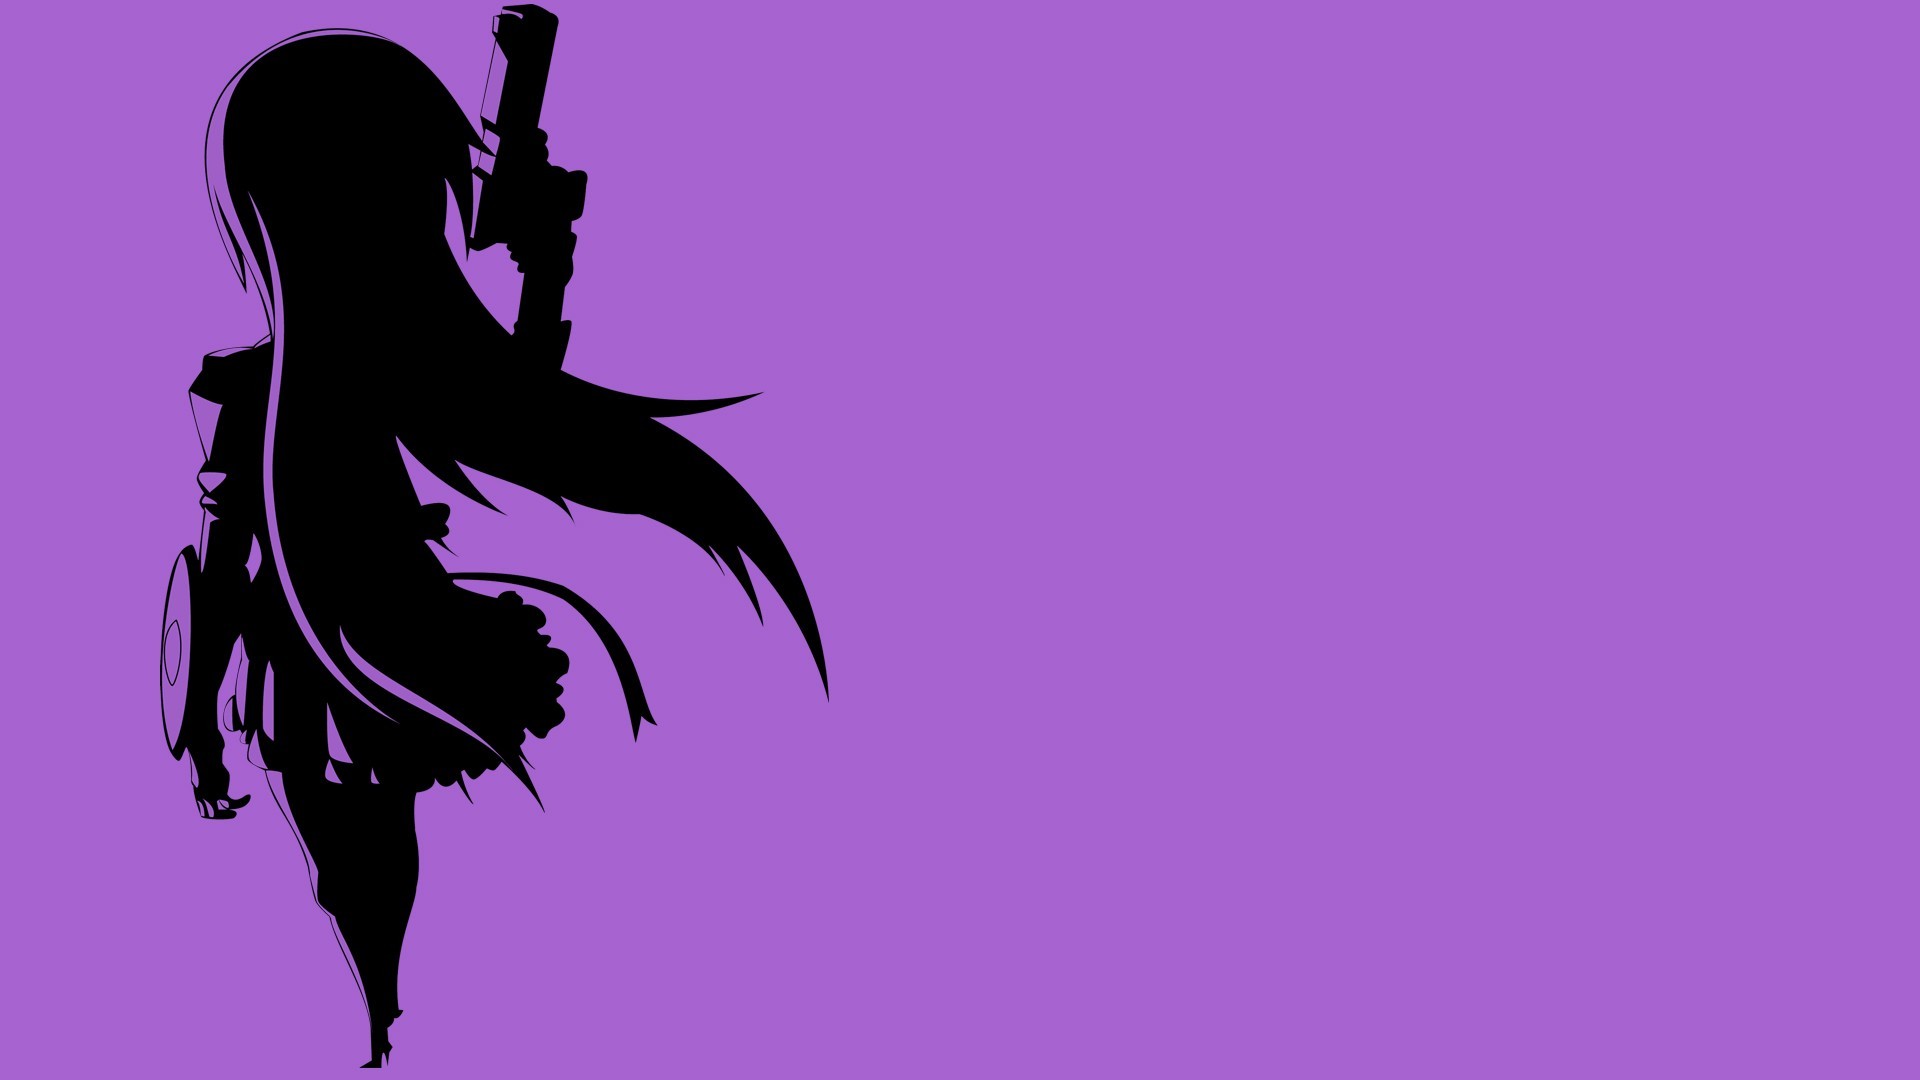 Anime 1920x1080 Mahou Shoujo Madoka Magica minimalism anime silhouette anime girls simple background girls with guns purple background gun weapon